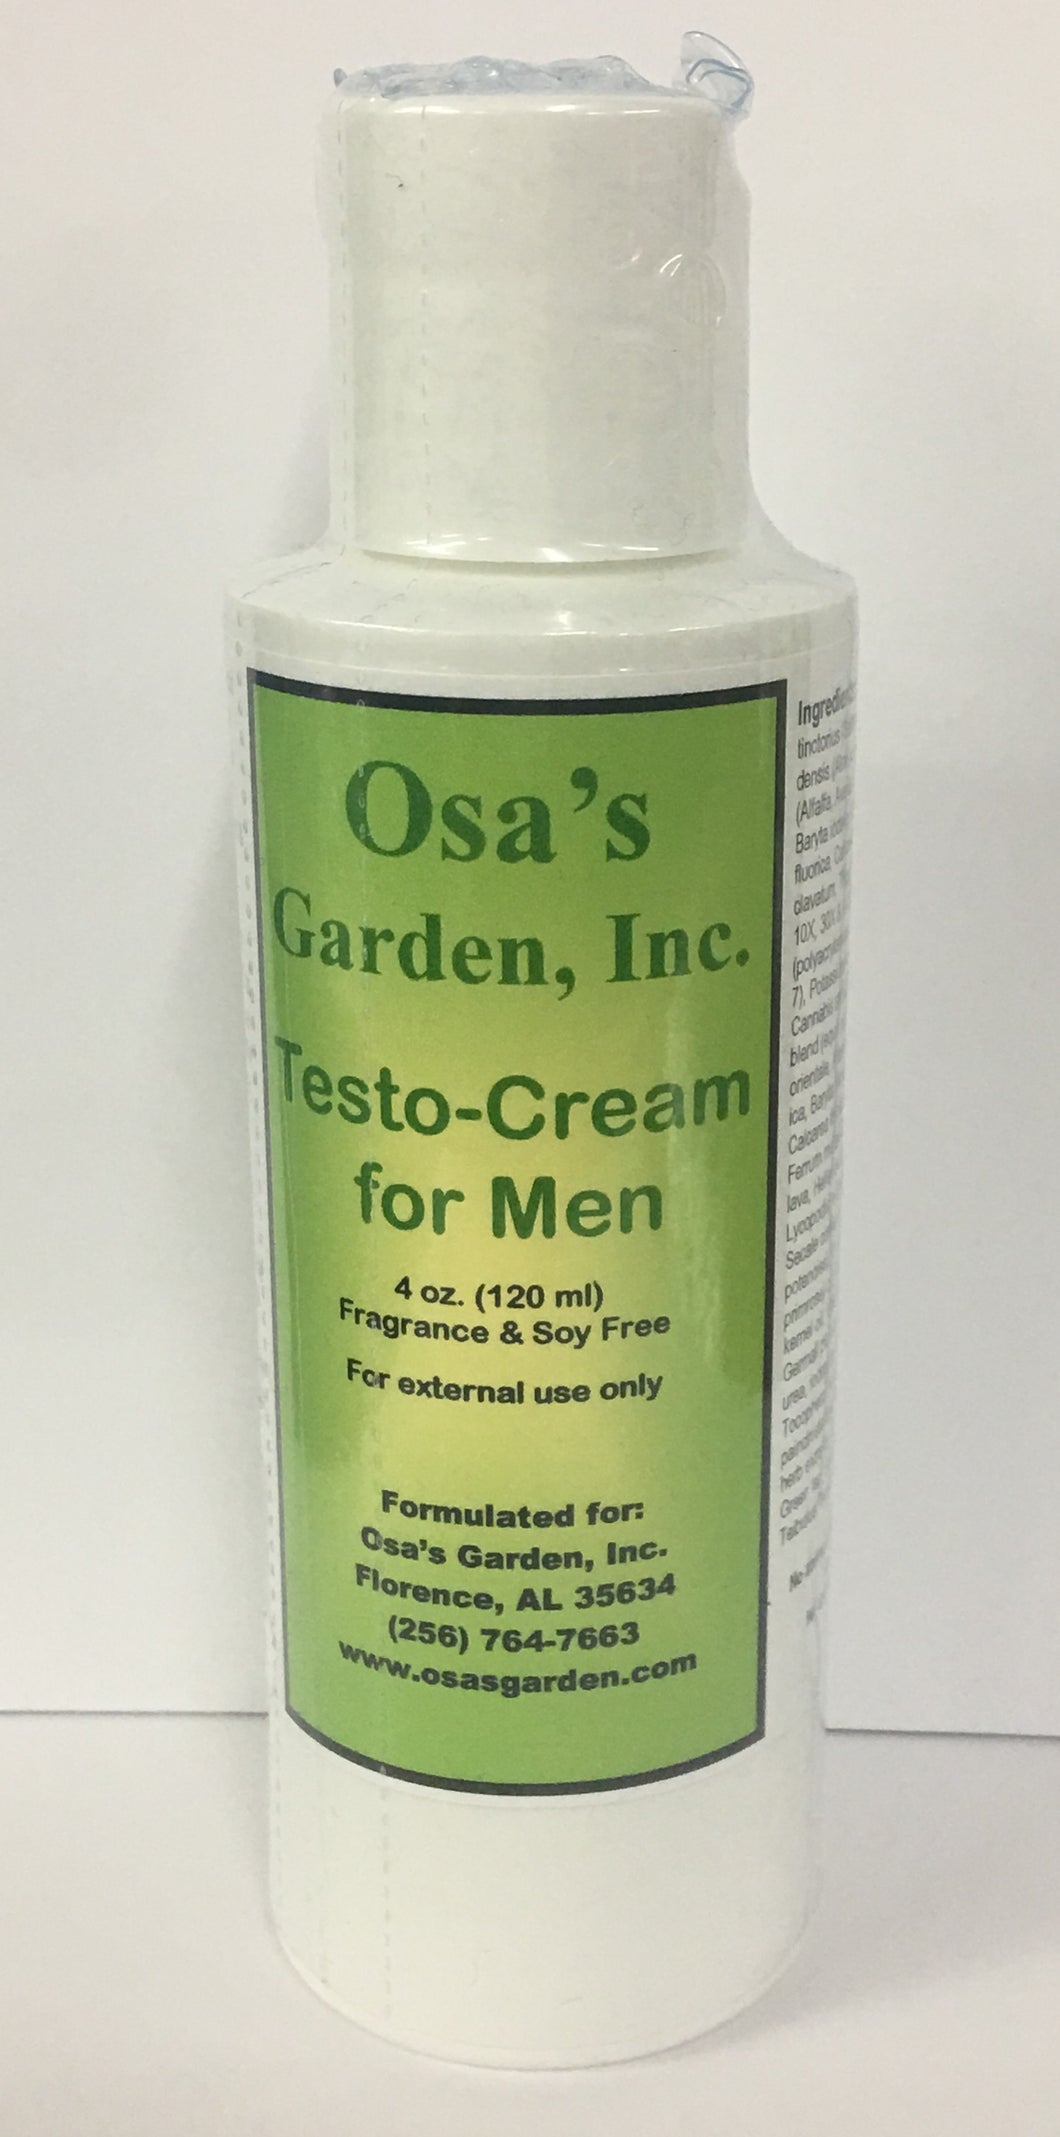 Testo-Cream for Men